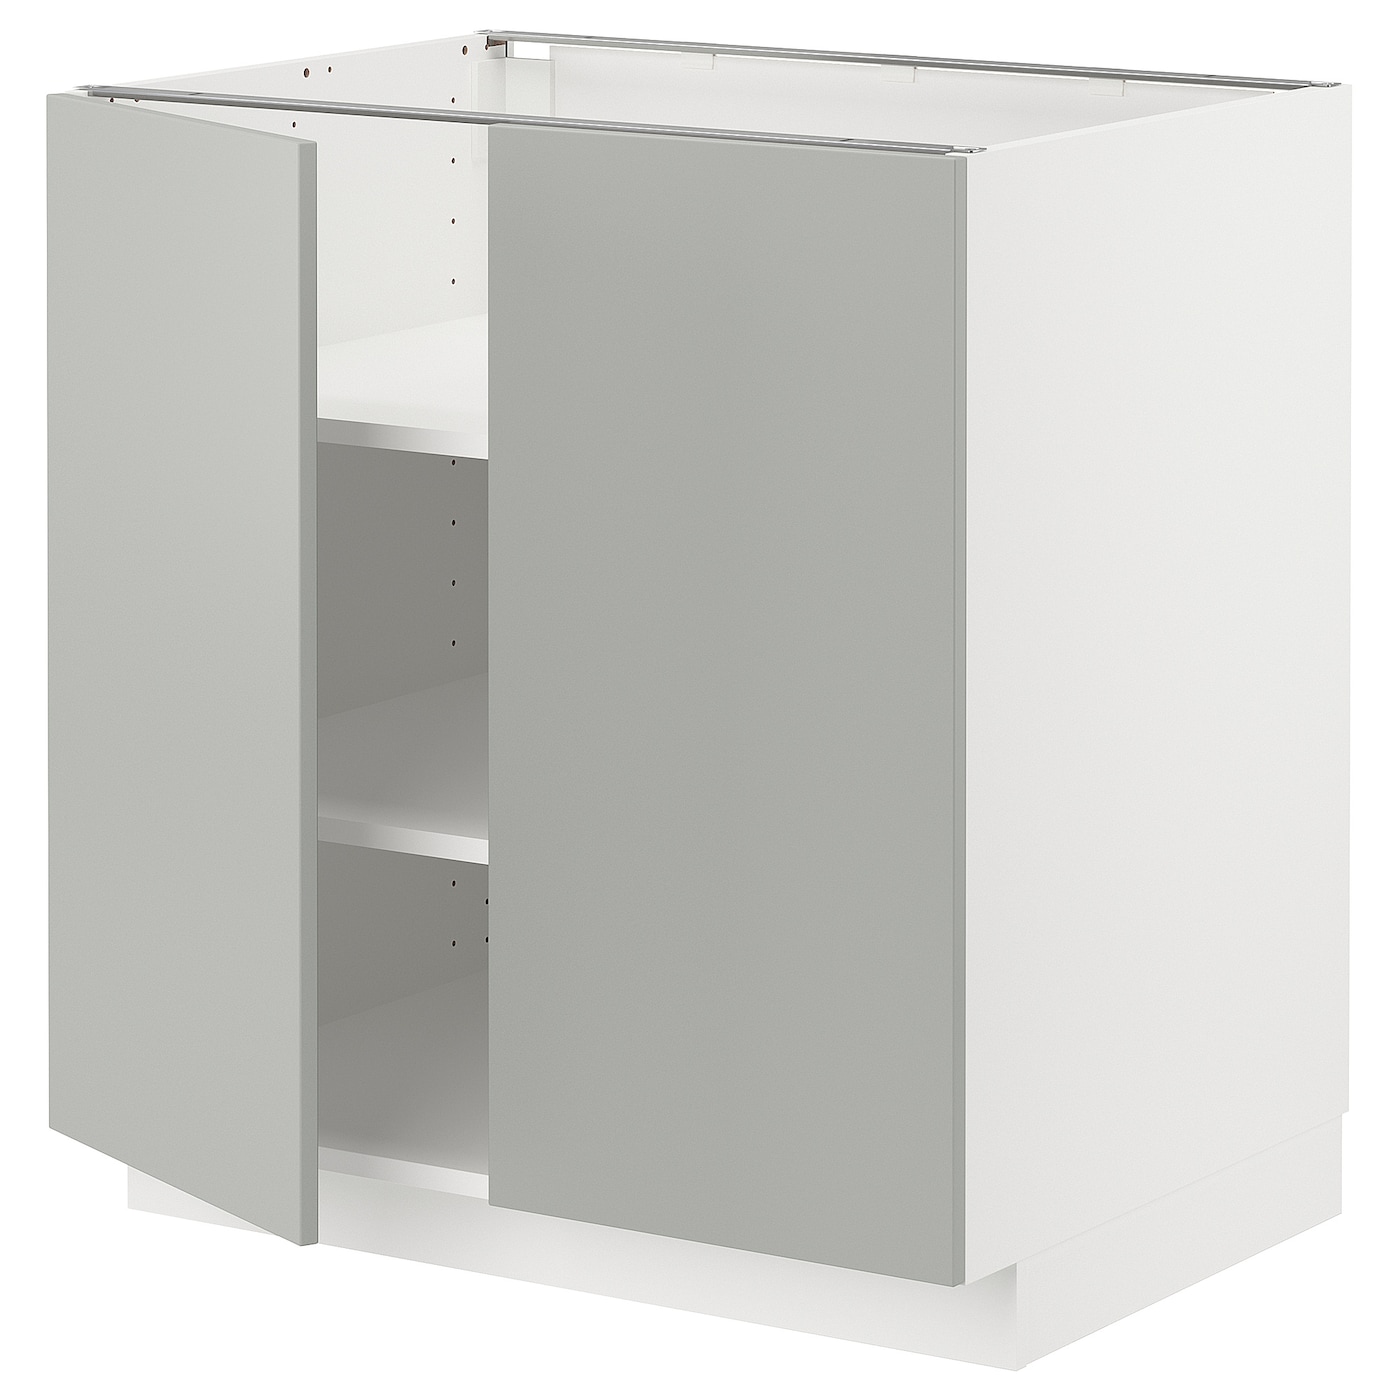 Напольный шкаф - METOD IKEA/ МЕТОД ИКЕА,  80х88 см, белый/светло-серый